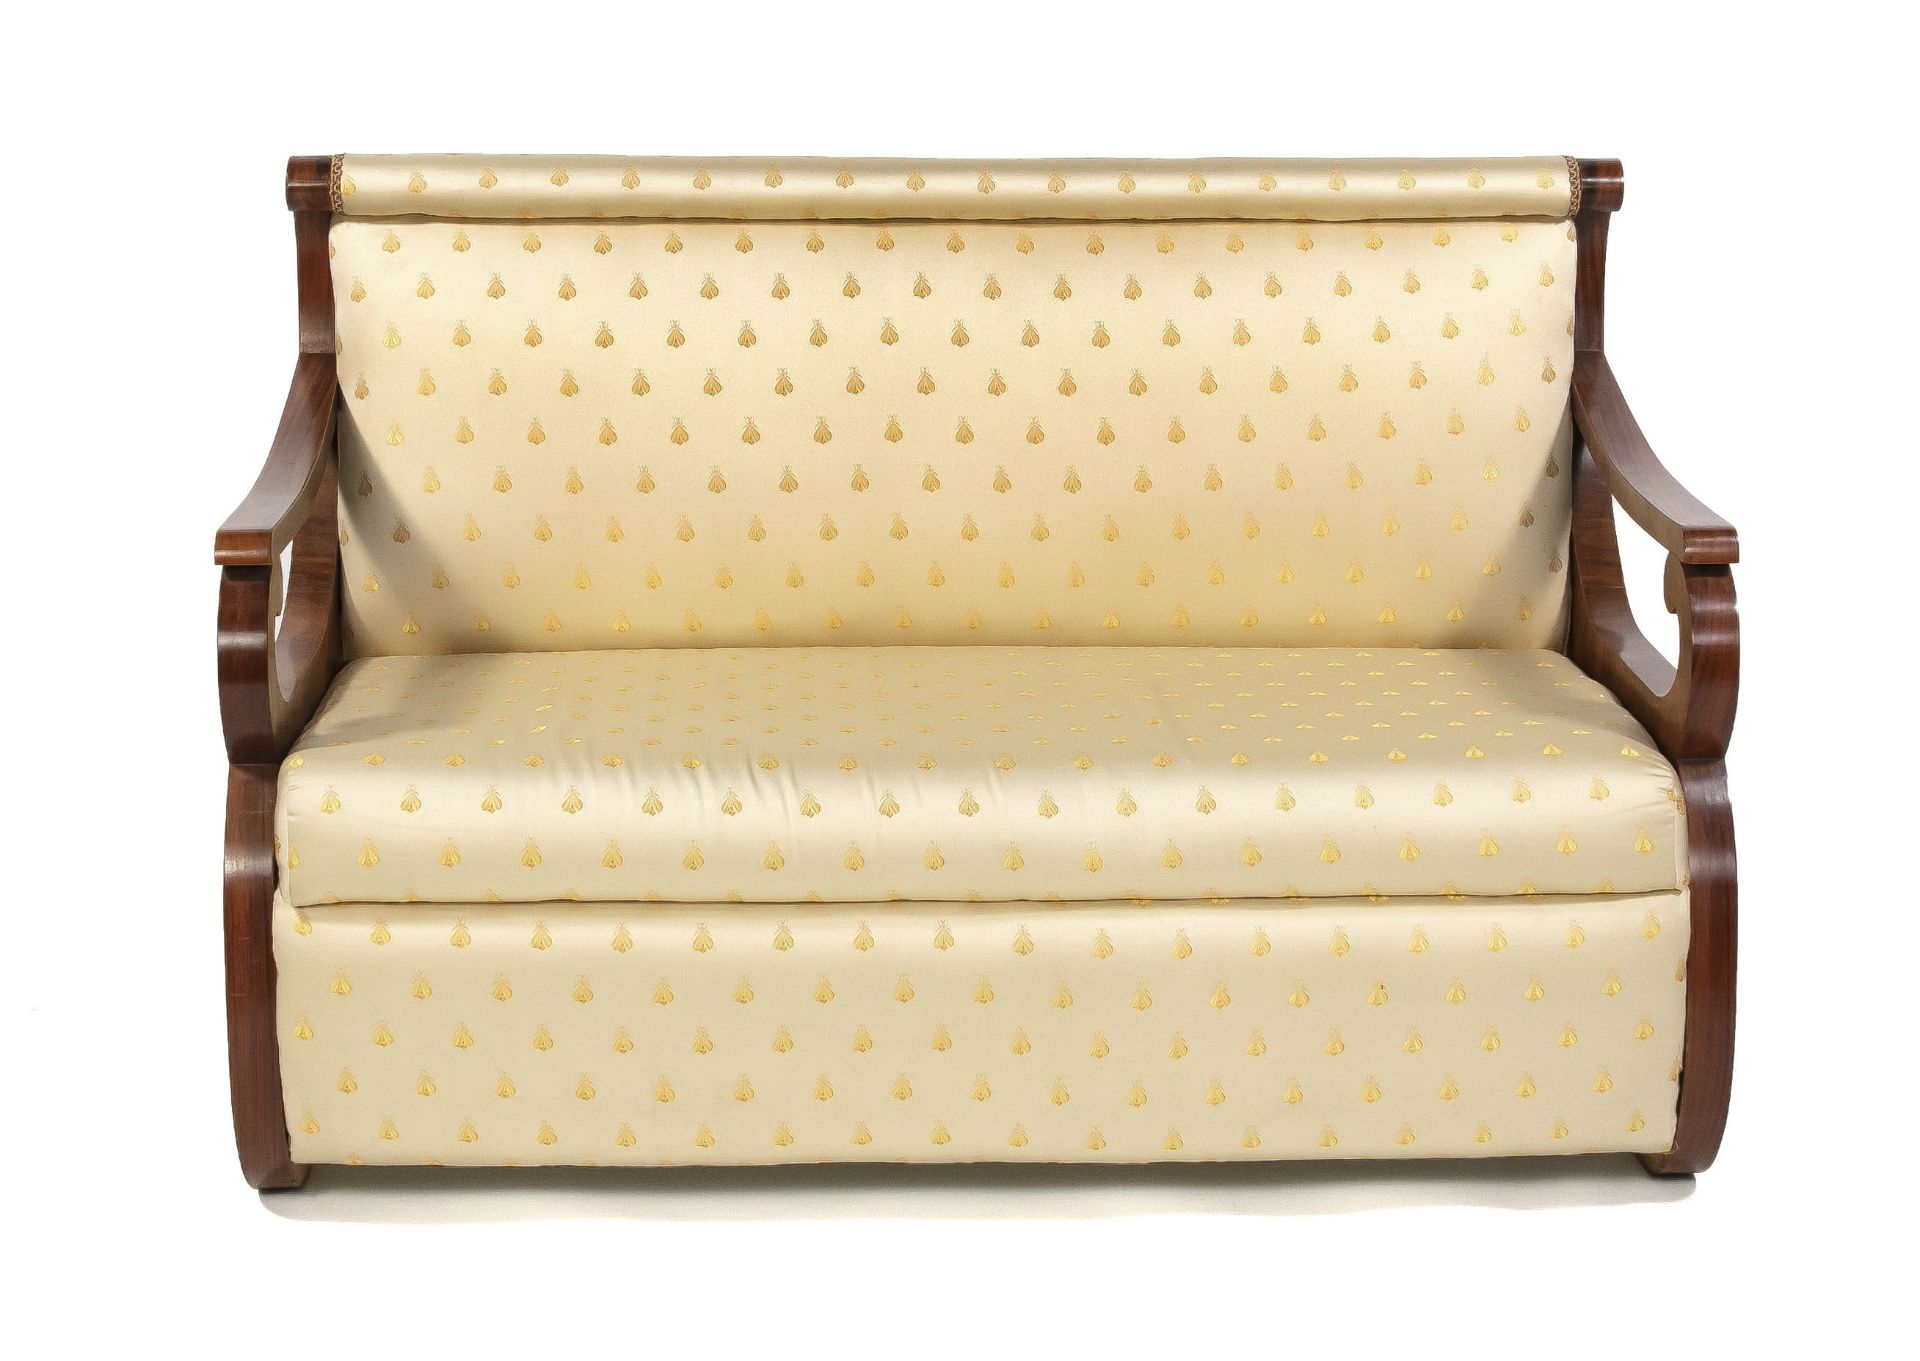 Viennese Biedermeier style sofa after Josef Dannhauser, 20th century, rosewood veneered, satin